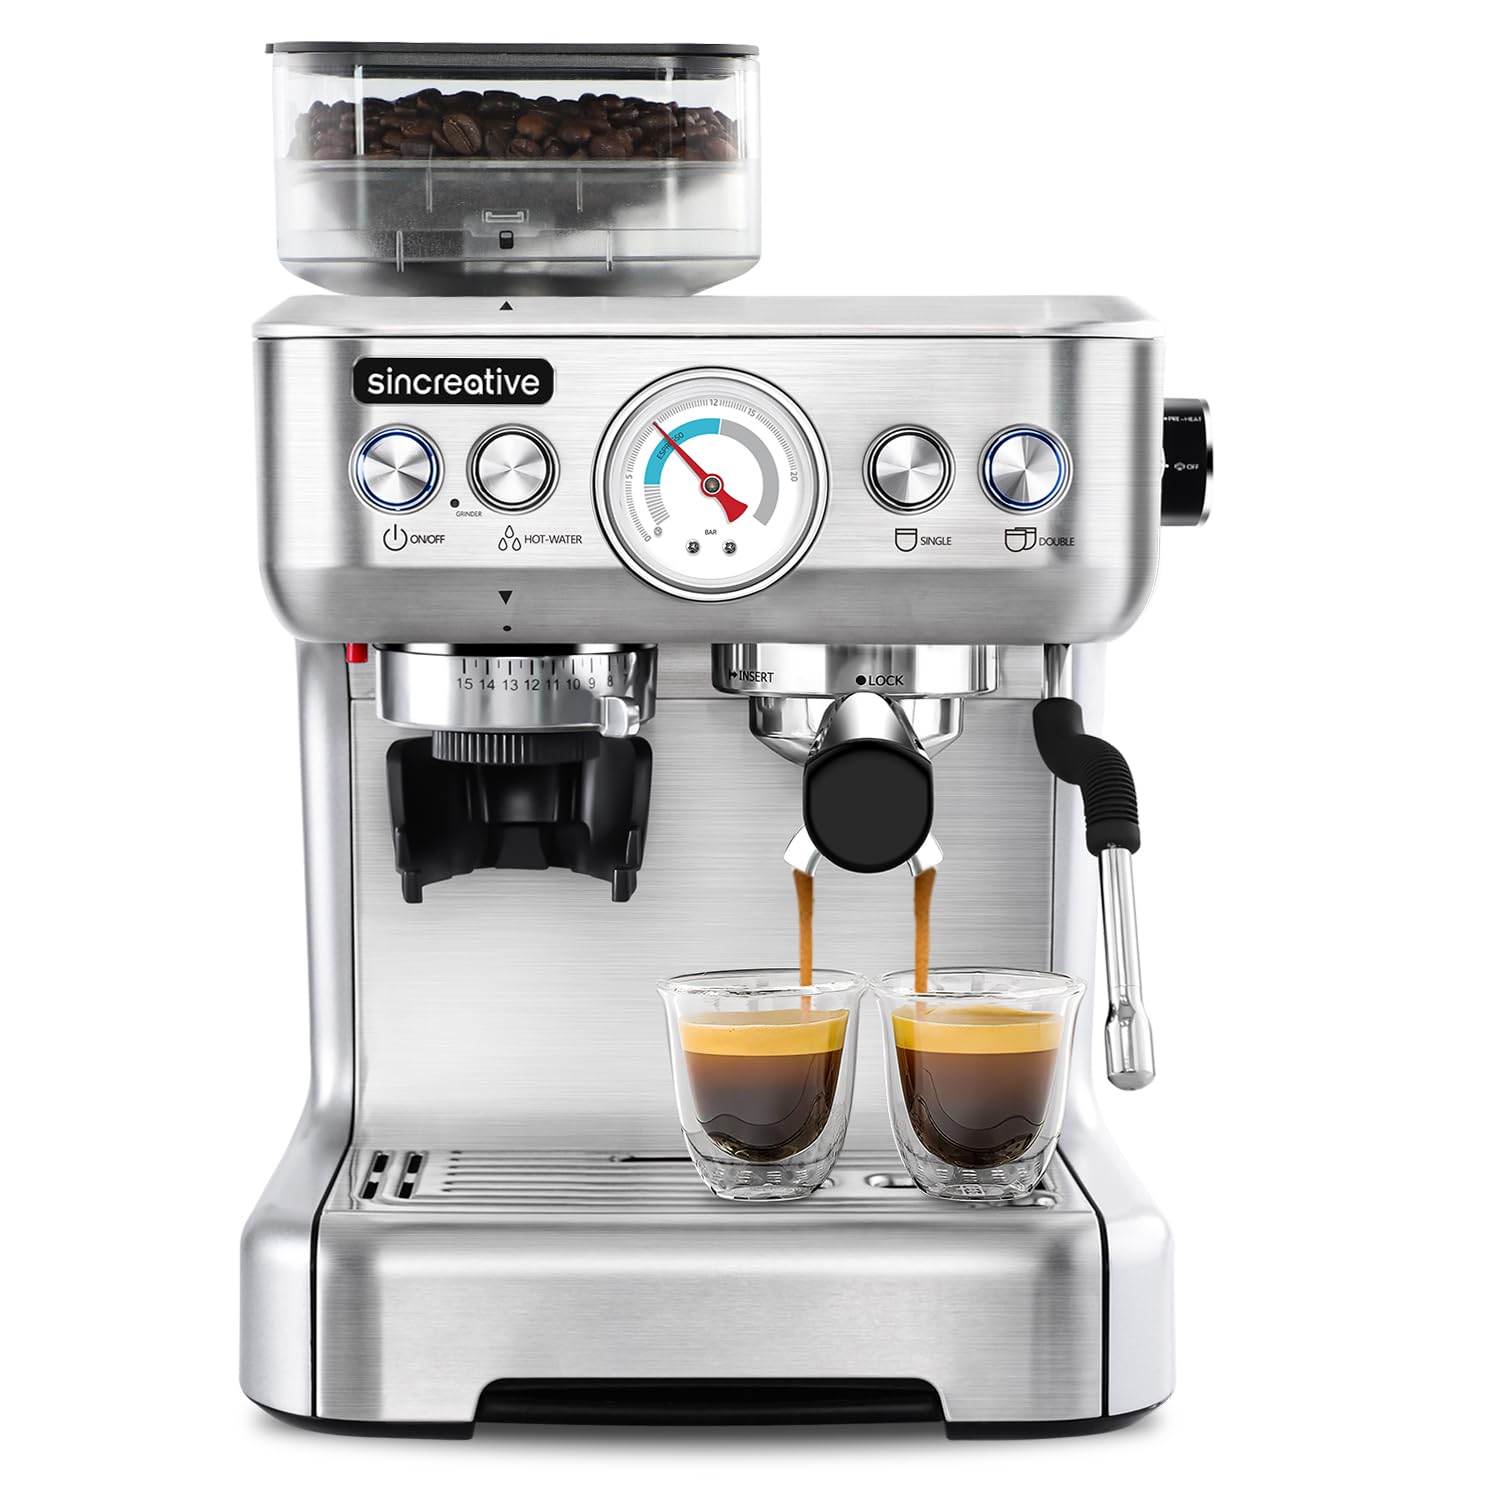 Sincreative Espresso Machine with Milk Frother